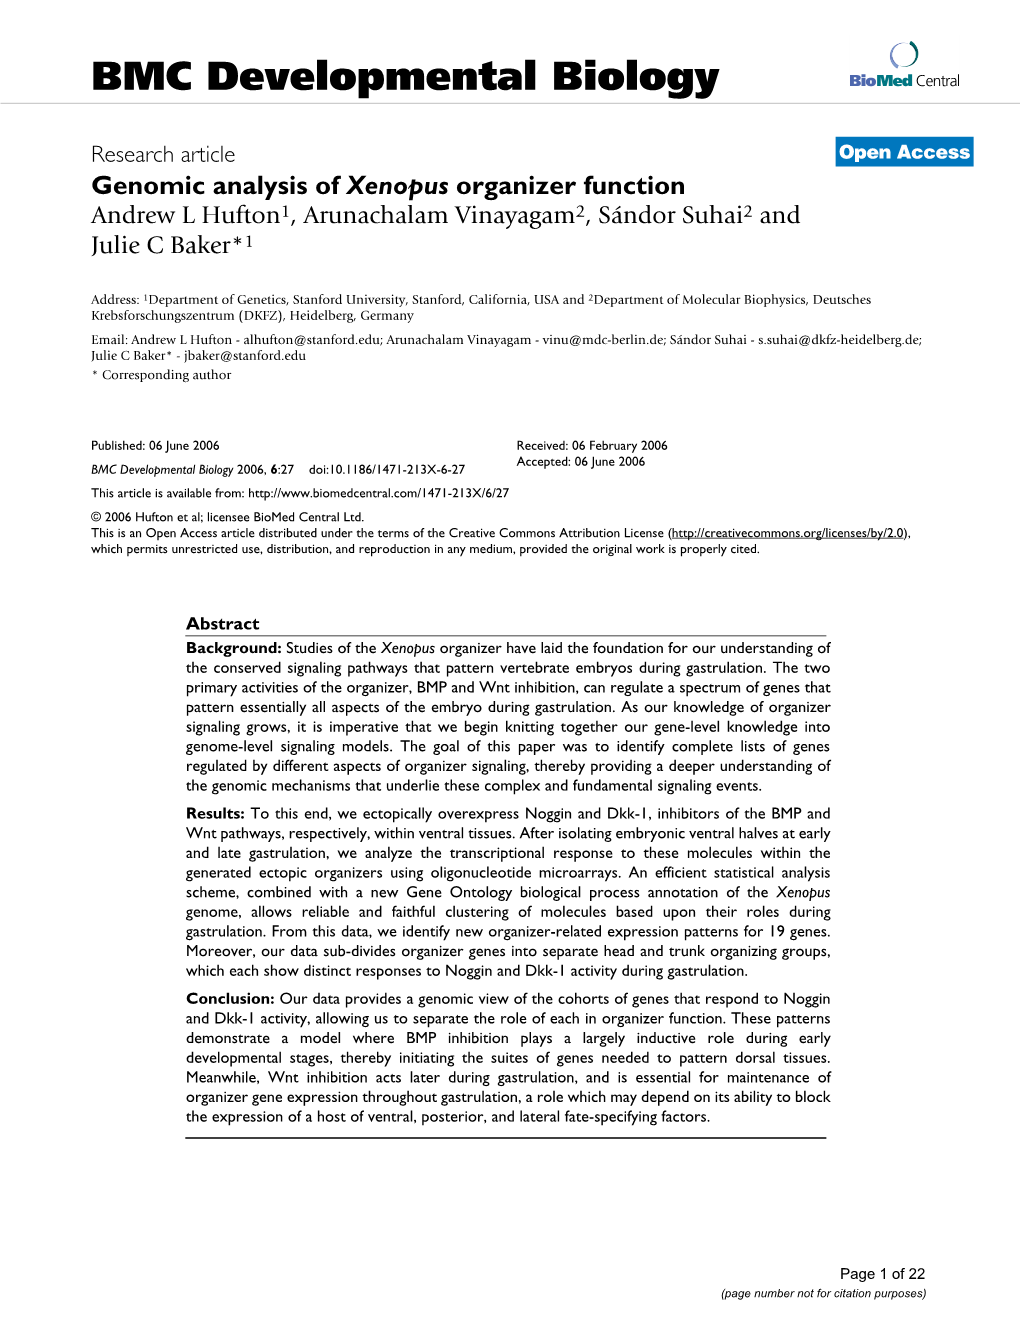 Genomic Analysis of Xenopus Organizer Function Andrew L Hufton1, Arunachalam Vinayagam2, Sándor Suhai2 and Julie C Baker*1